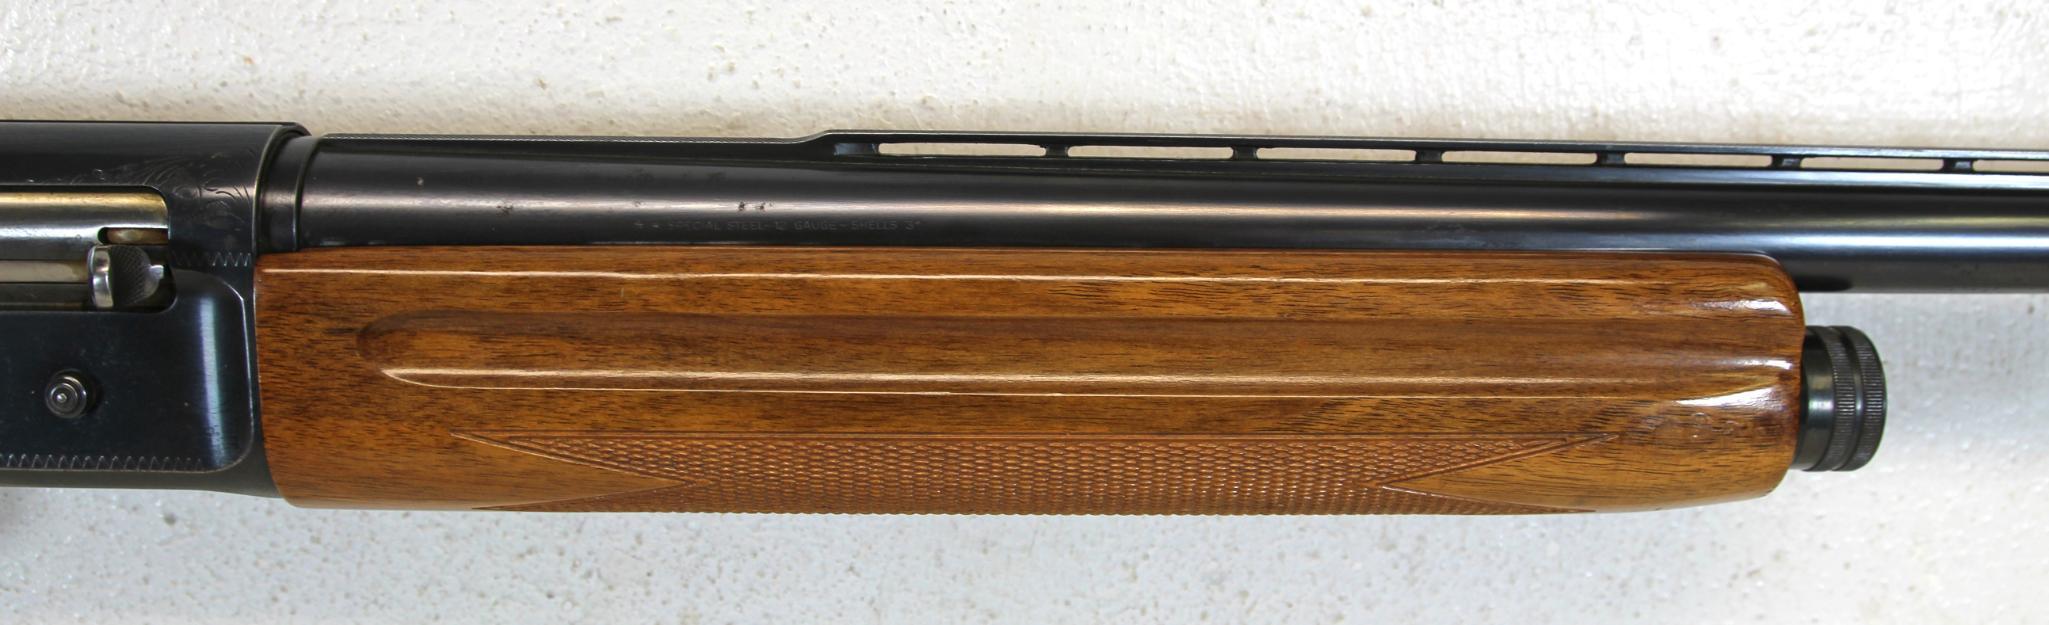 Belgium Browning A-5 Magnum 12 Ga. Semi-Auto Shotgun 27 1/2" VR Barrel... 3" Chamber... Modified Cho